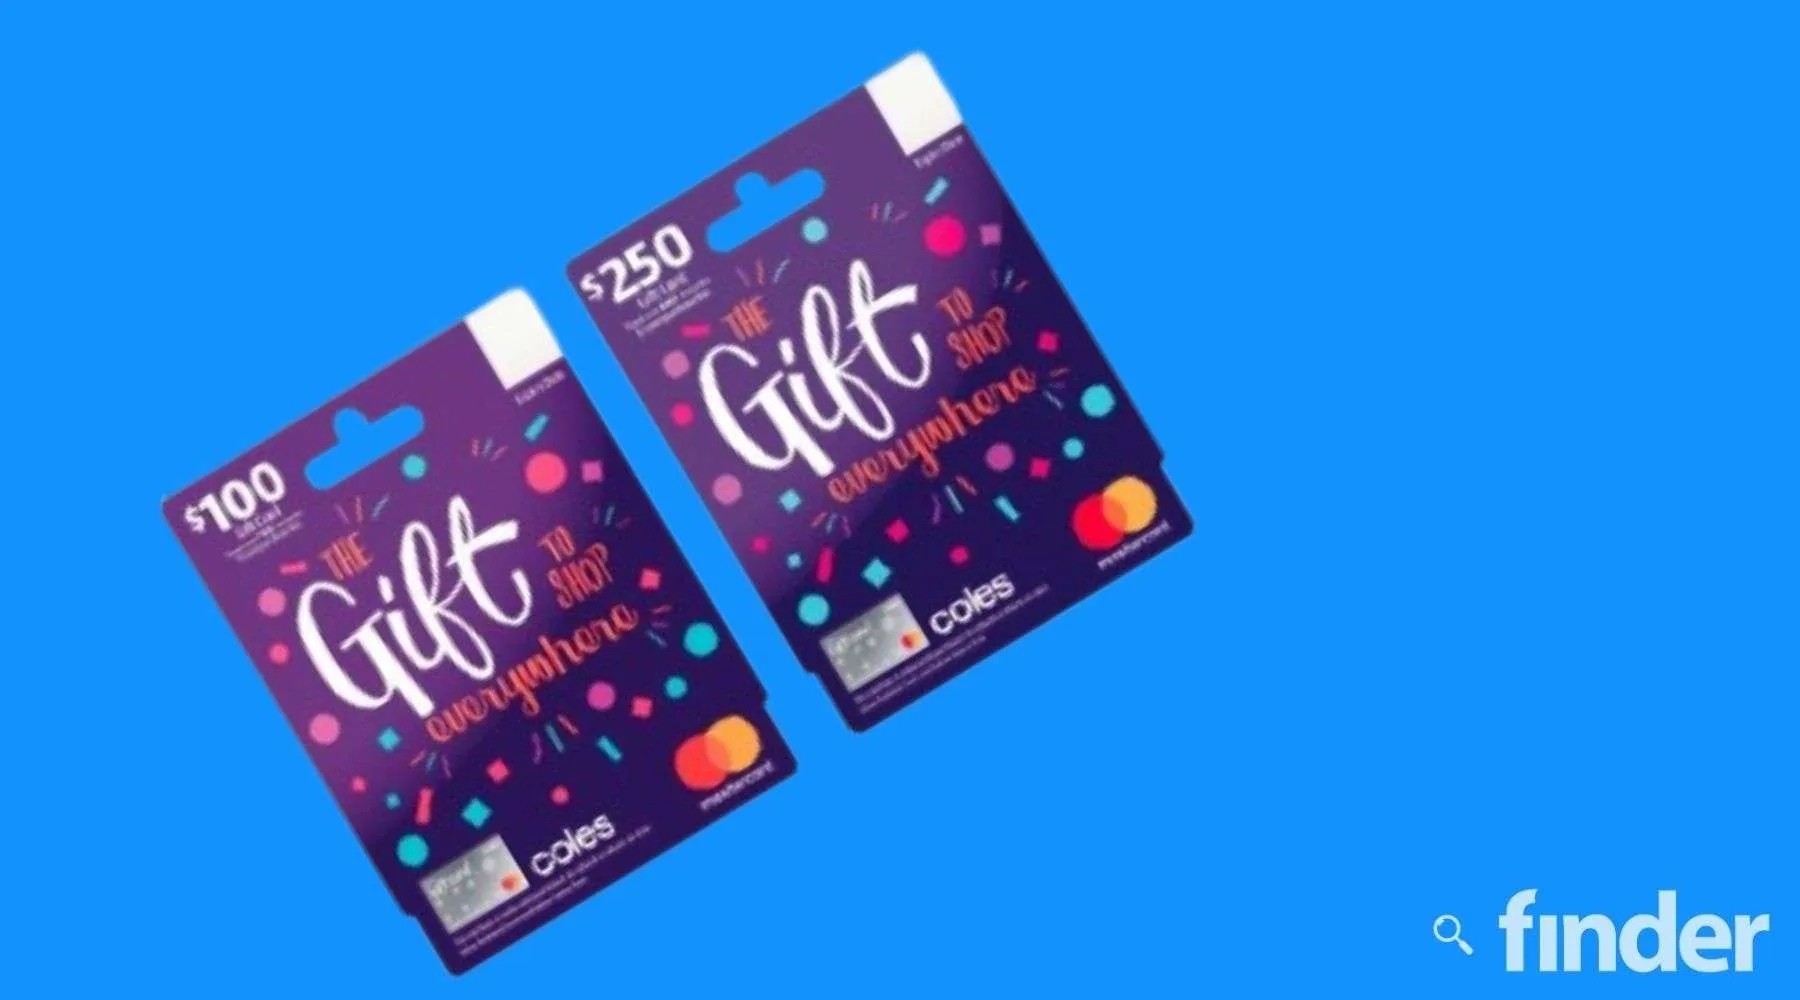 Free Cole's eGift Card - $25 AUD - Rewards Store